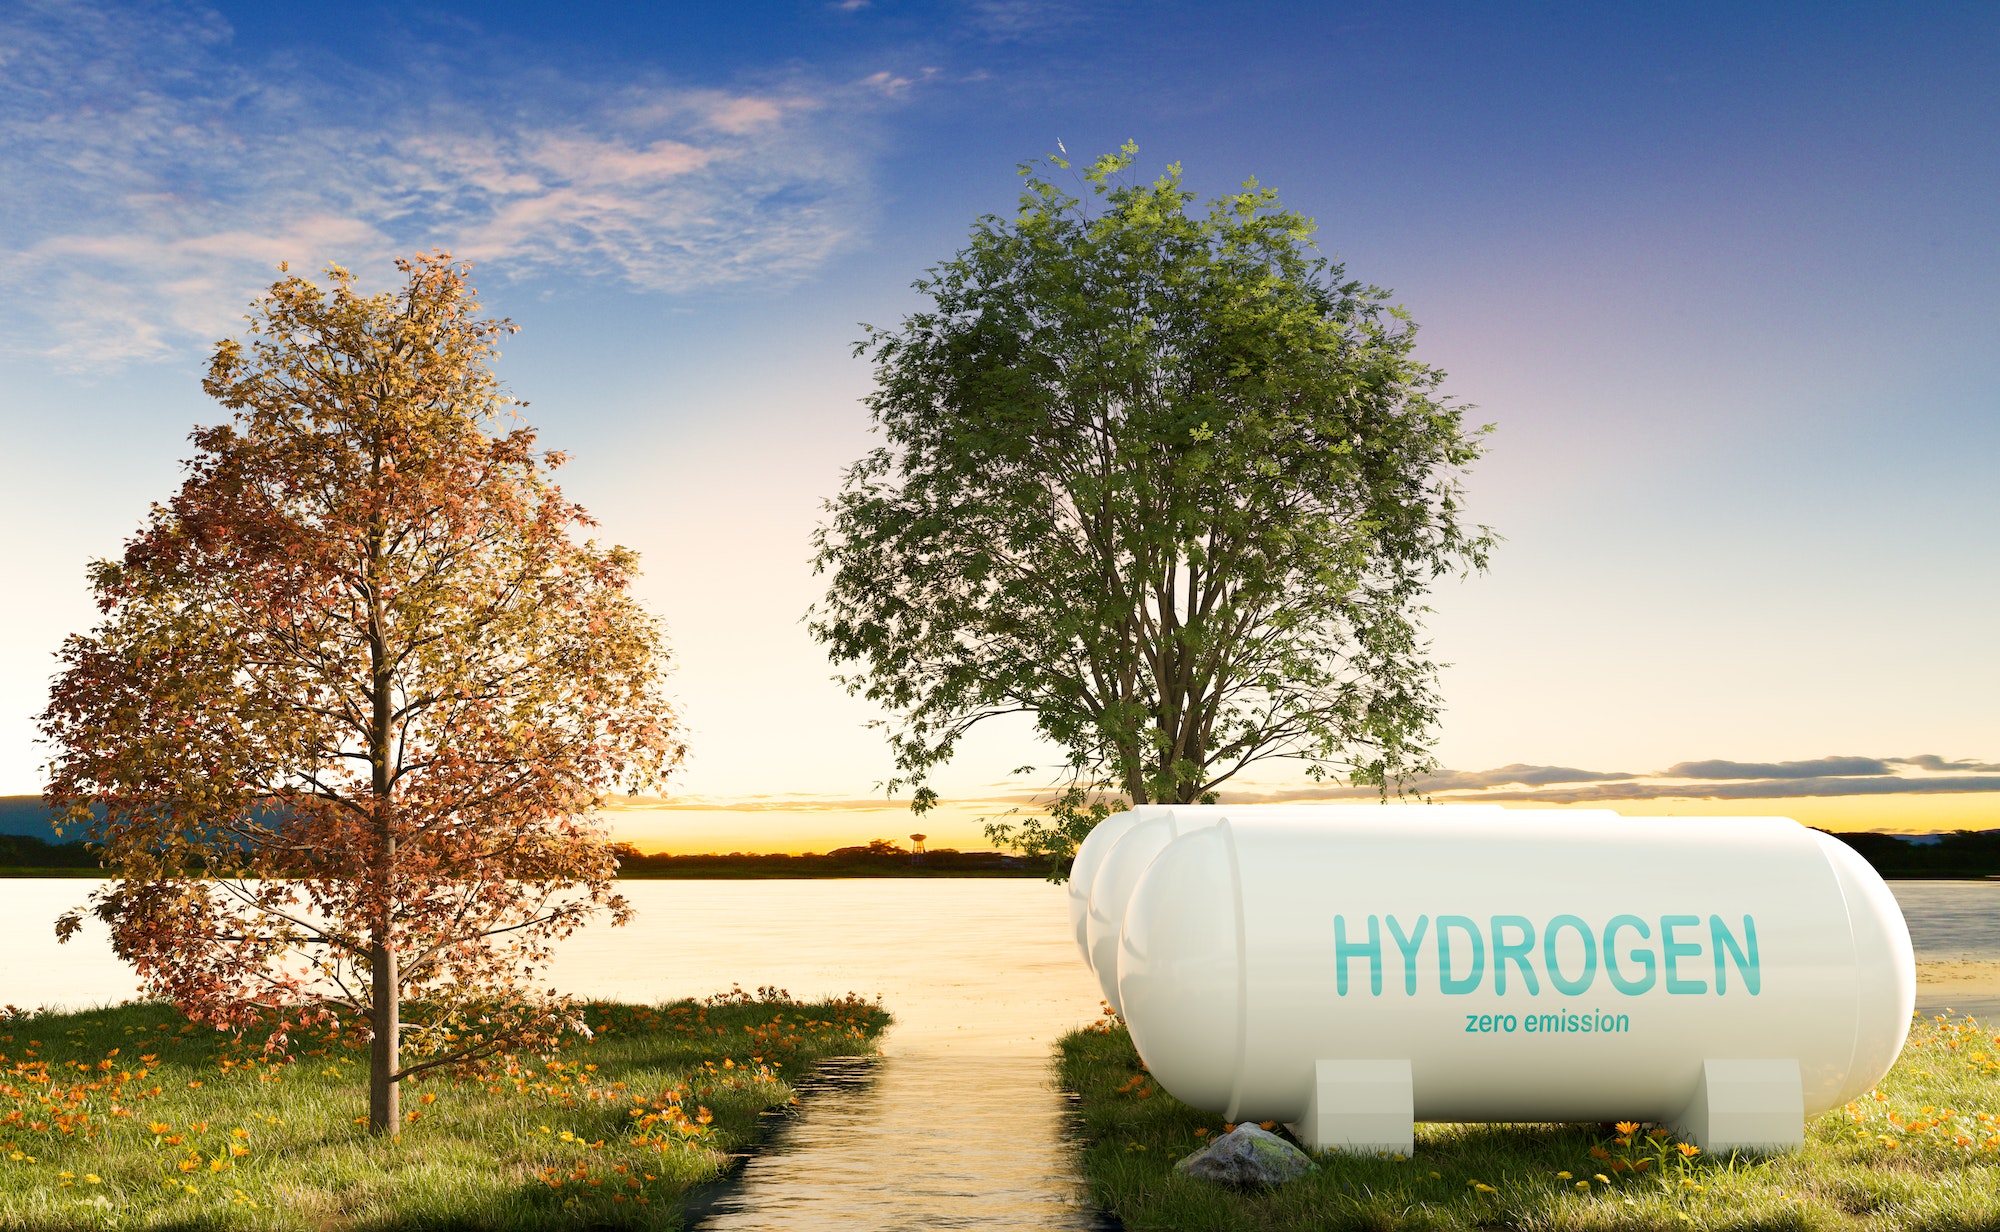 hydrogen power storage nearly river in sunset scene